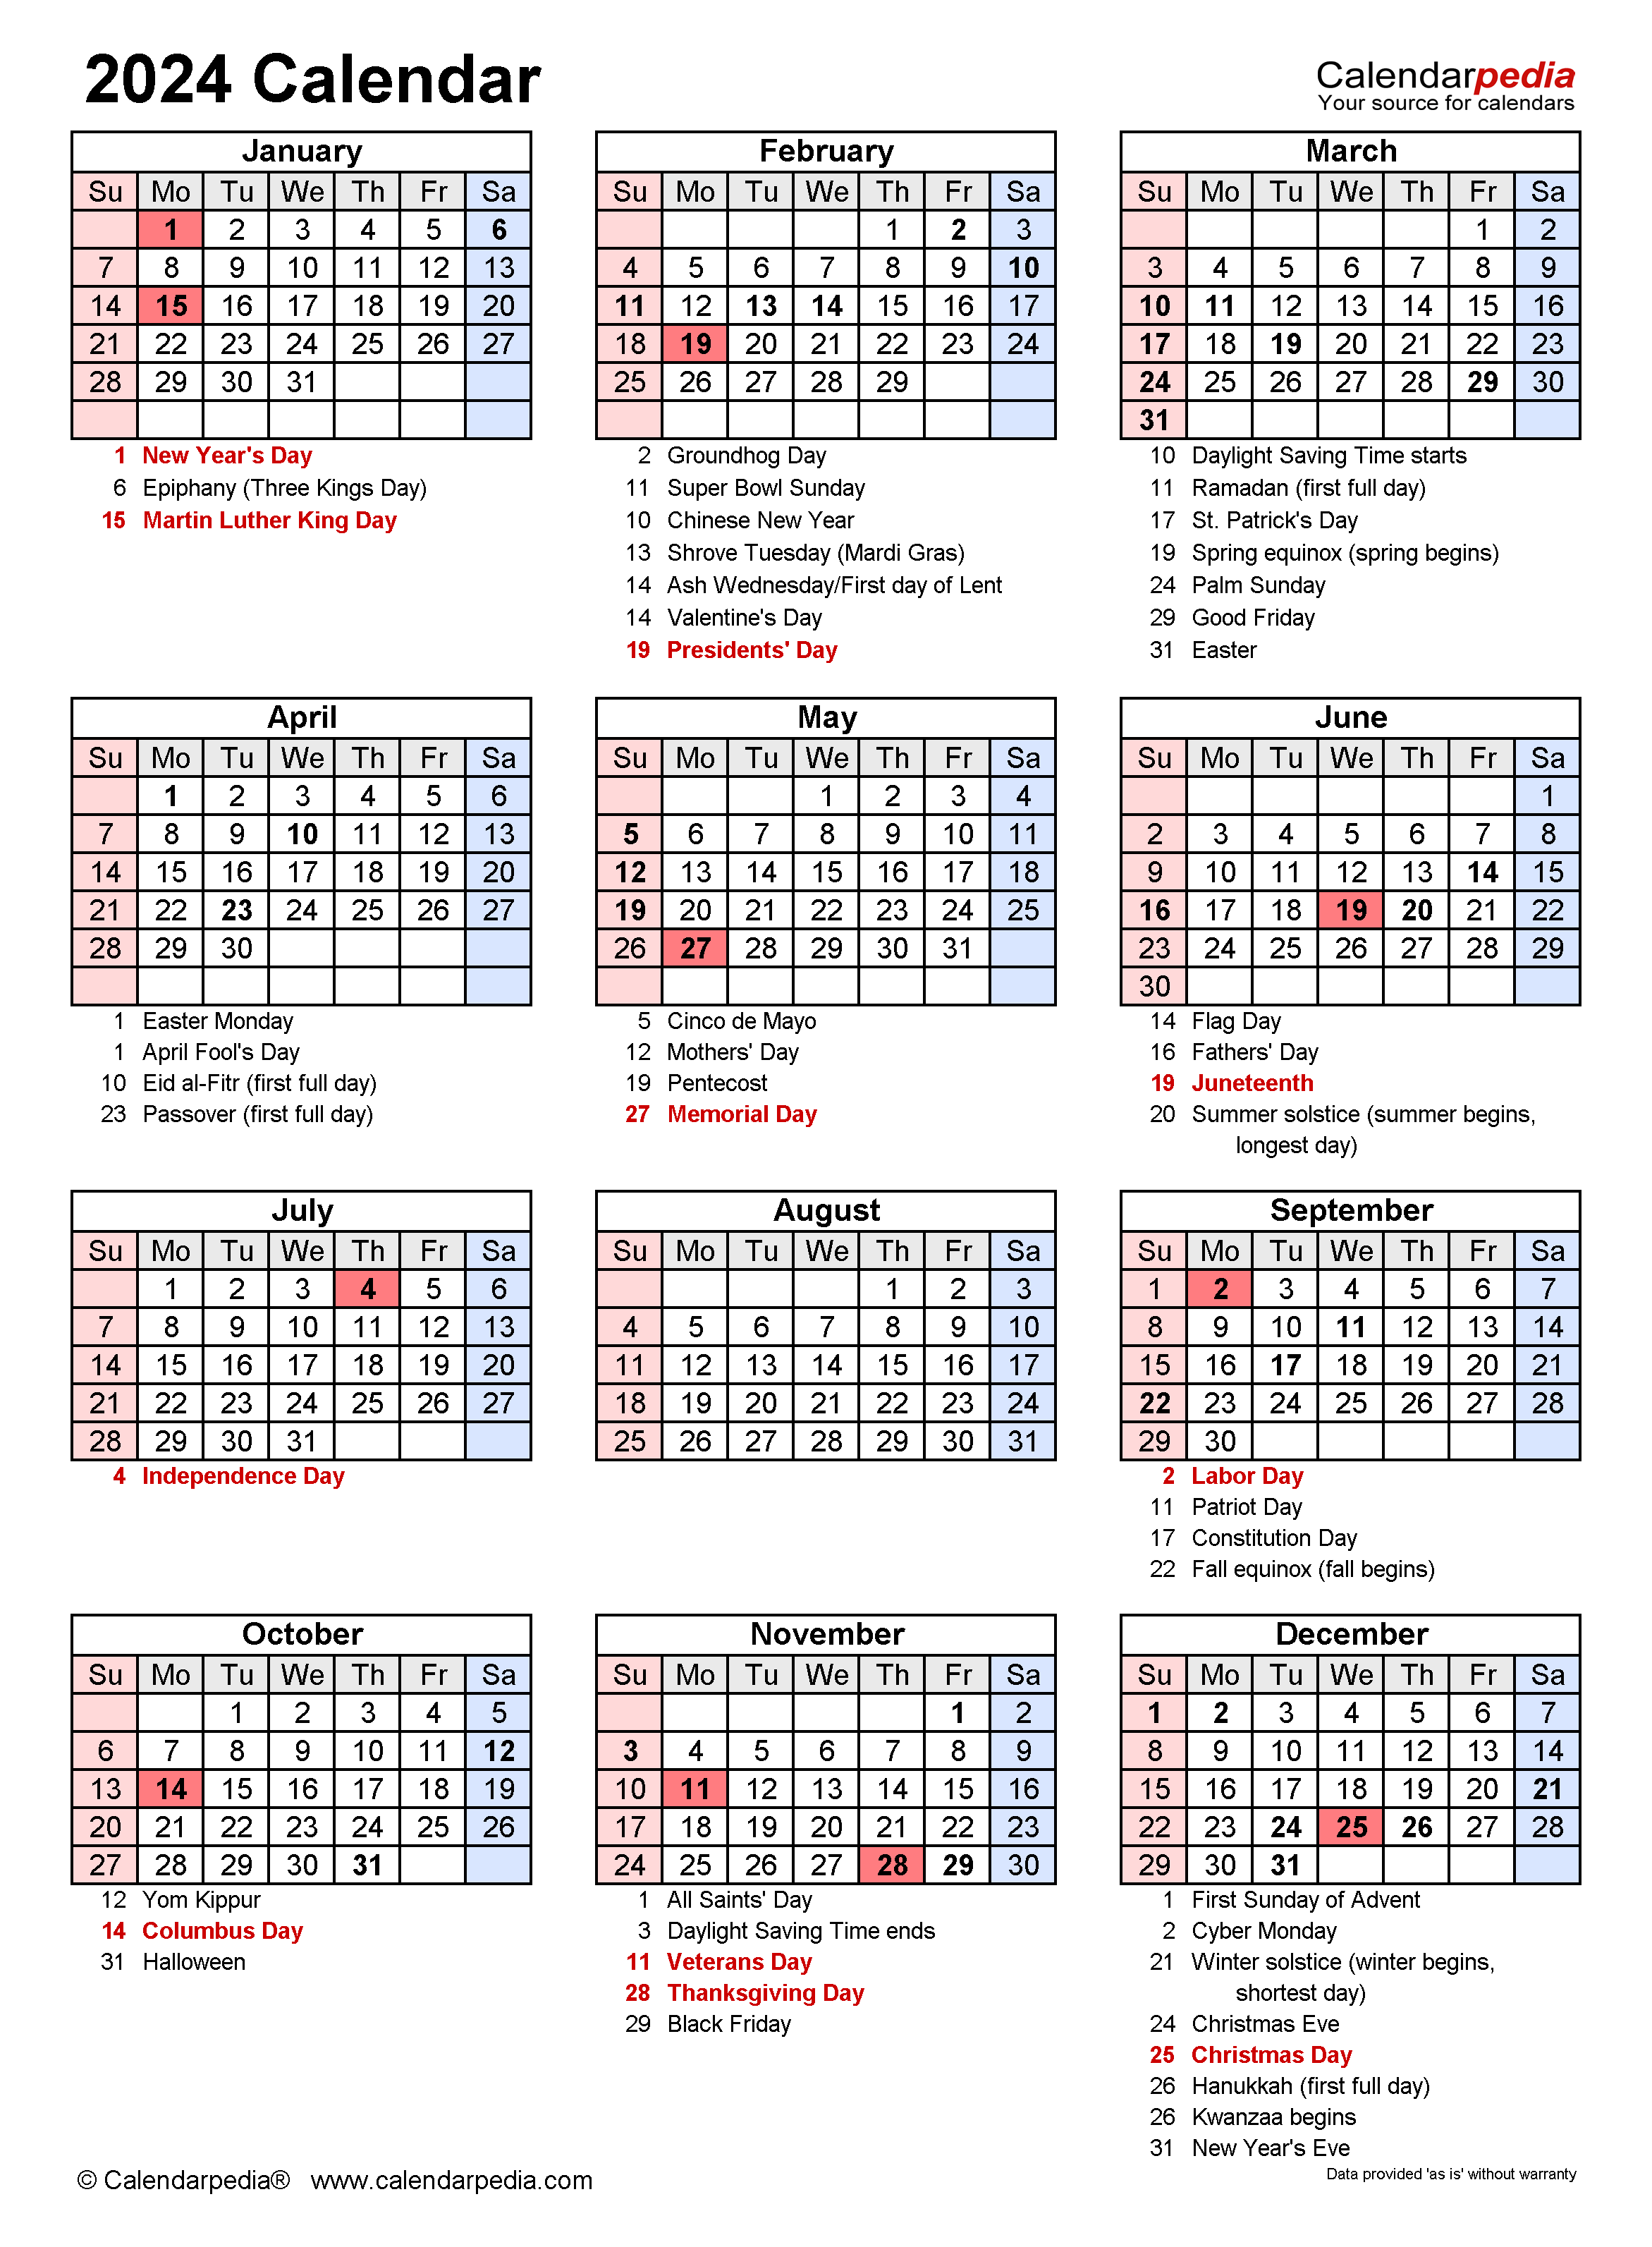 2024 Calendar Free Printable PDF Templates Calendarpedia - Free Printable 2024 Calendar With Usa Holidays